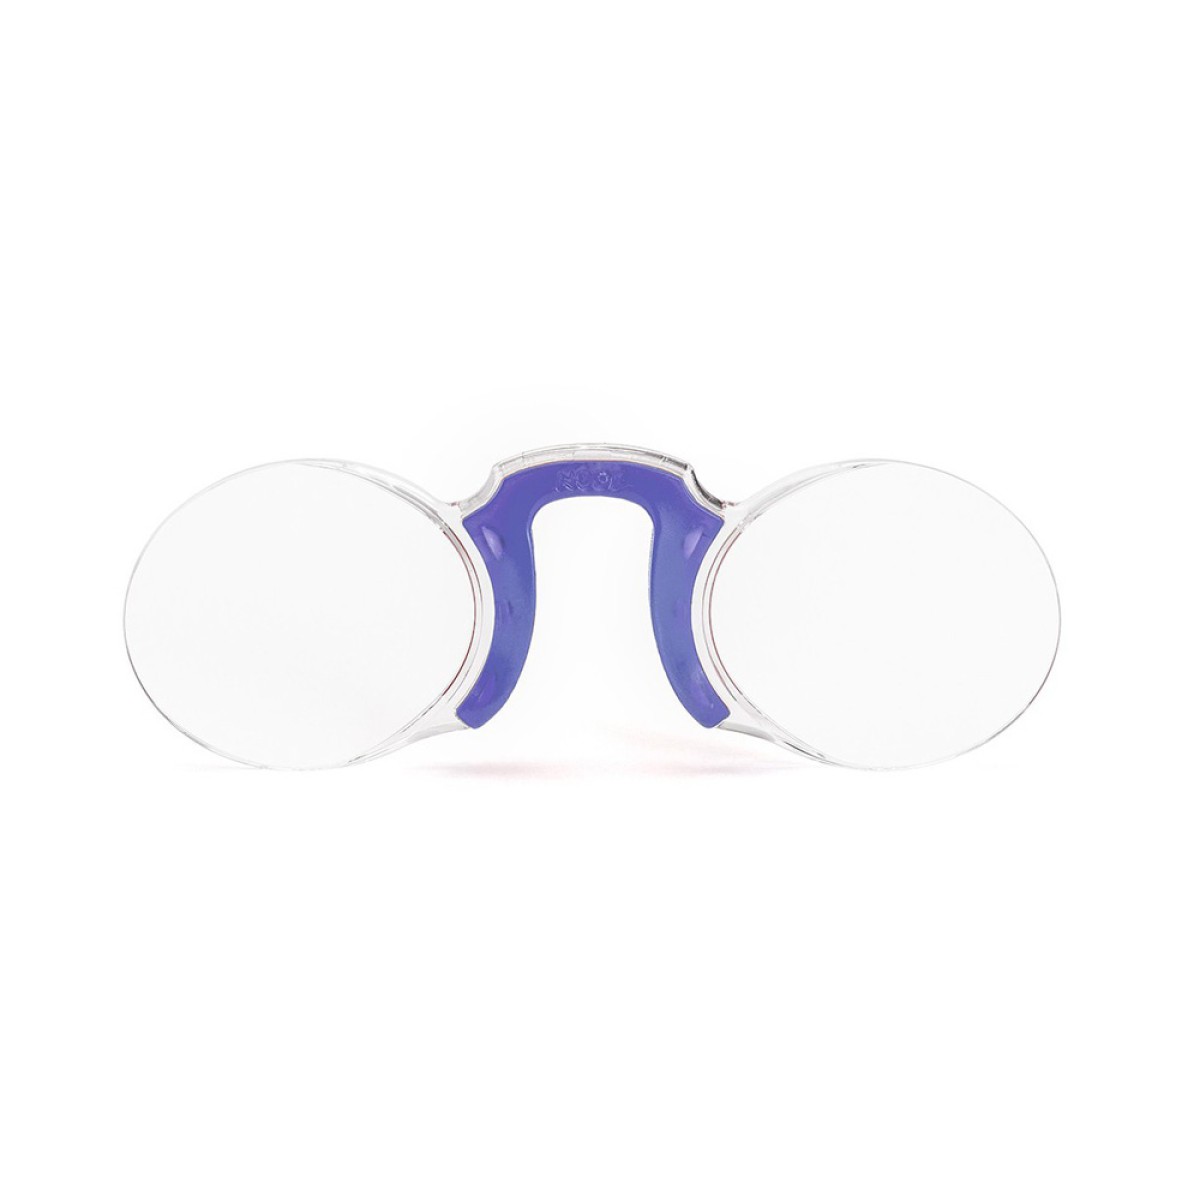 Nooz - Reading glasses - Oval - Navy Blue